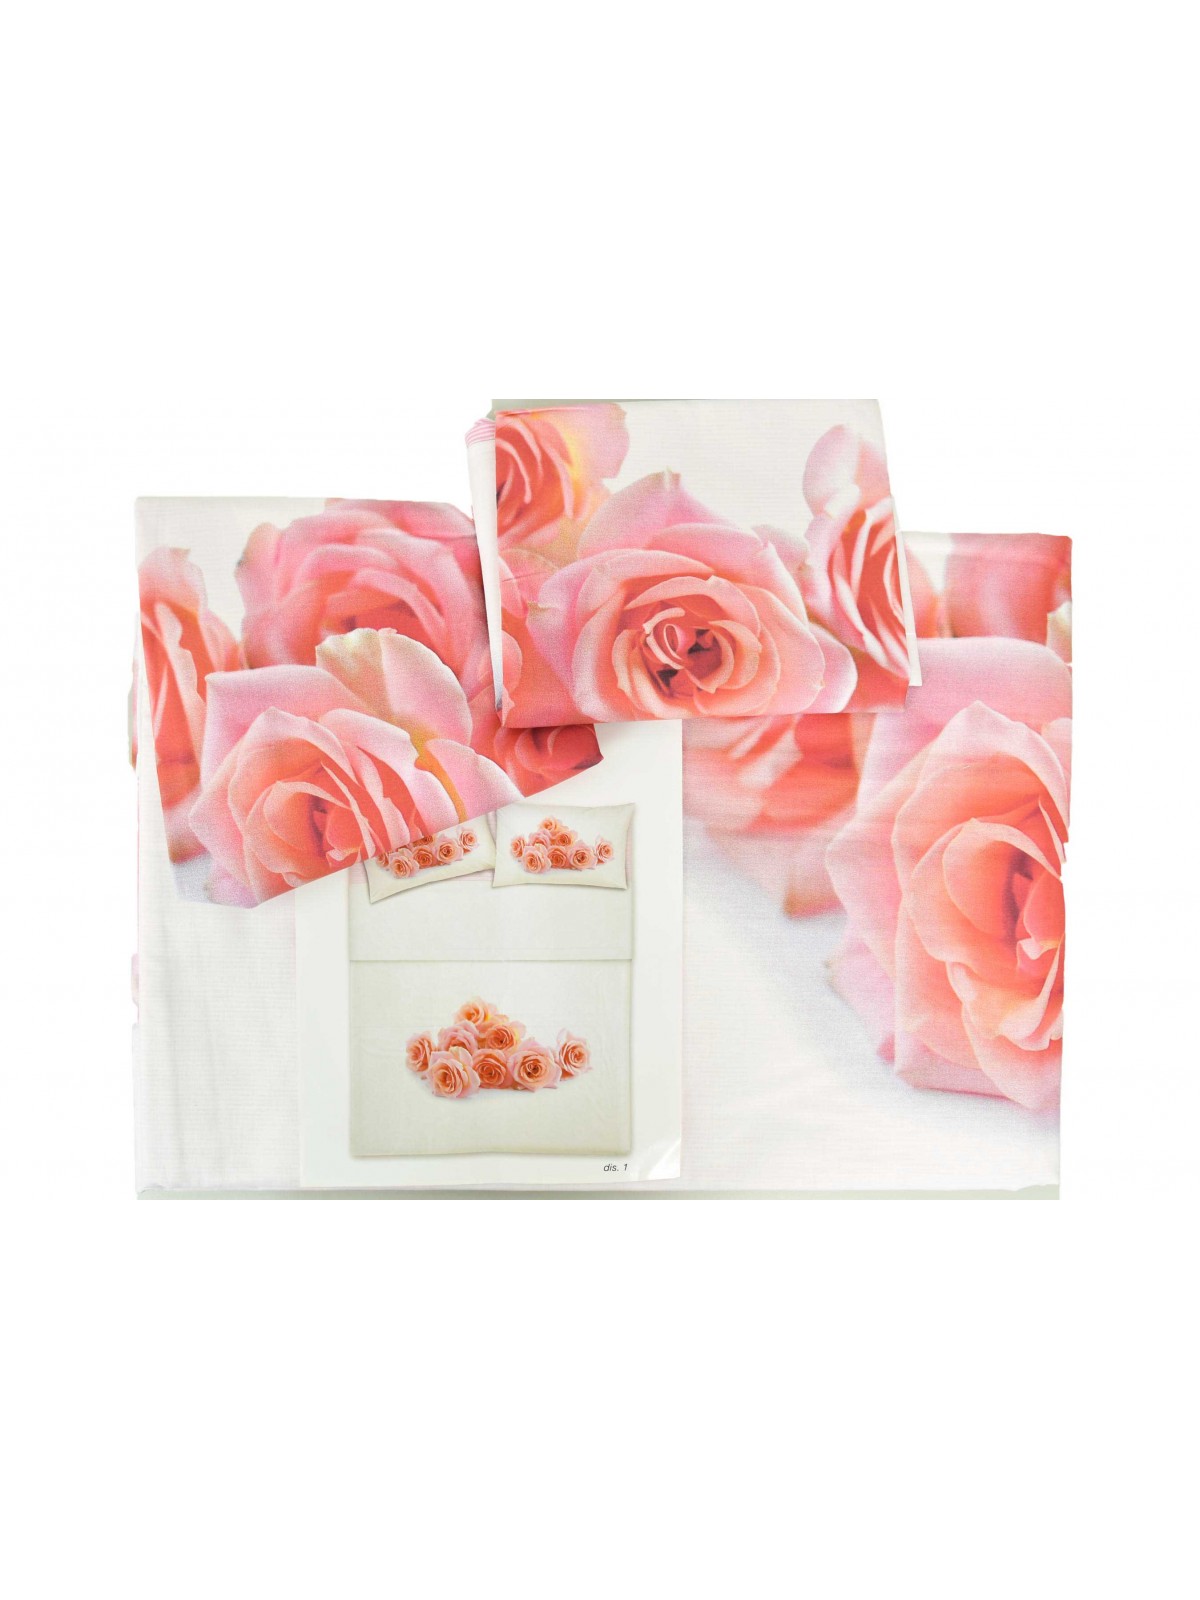 Copripiumino Matrimoniale Rose Rosa Stampa Digitale 250x200 +2 Federe